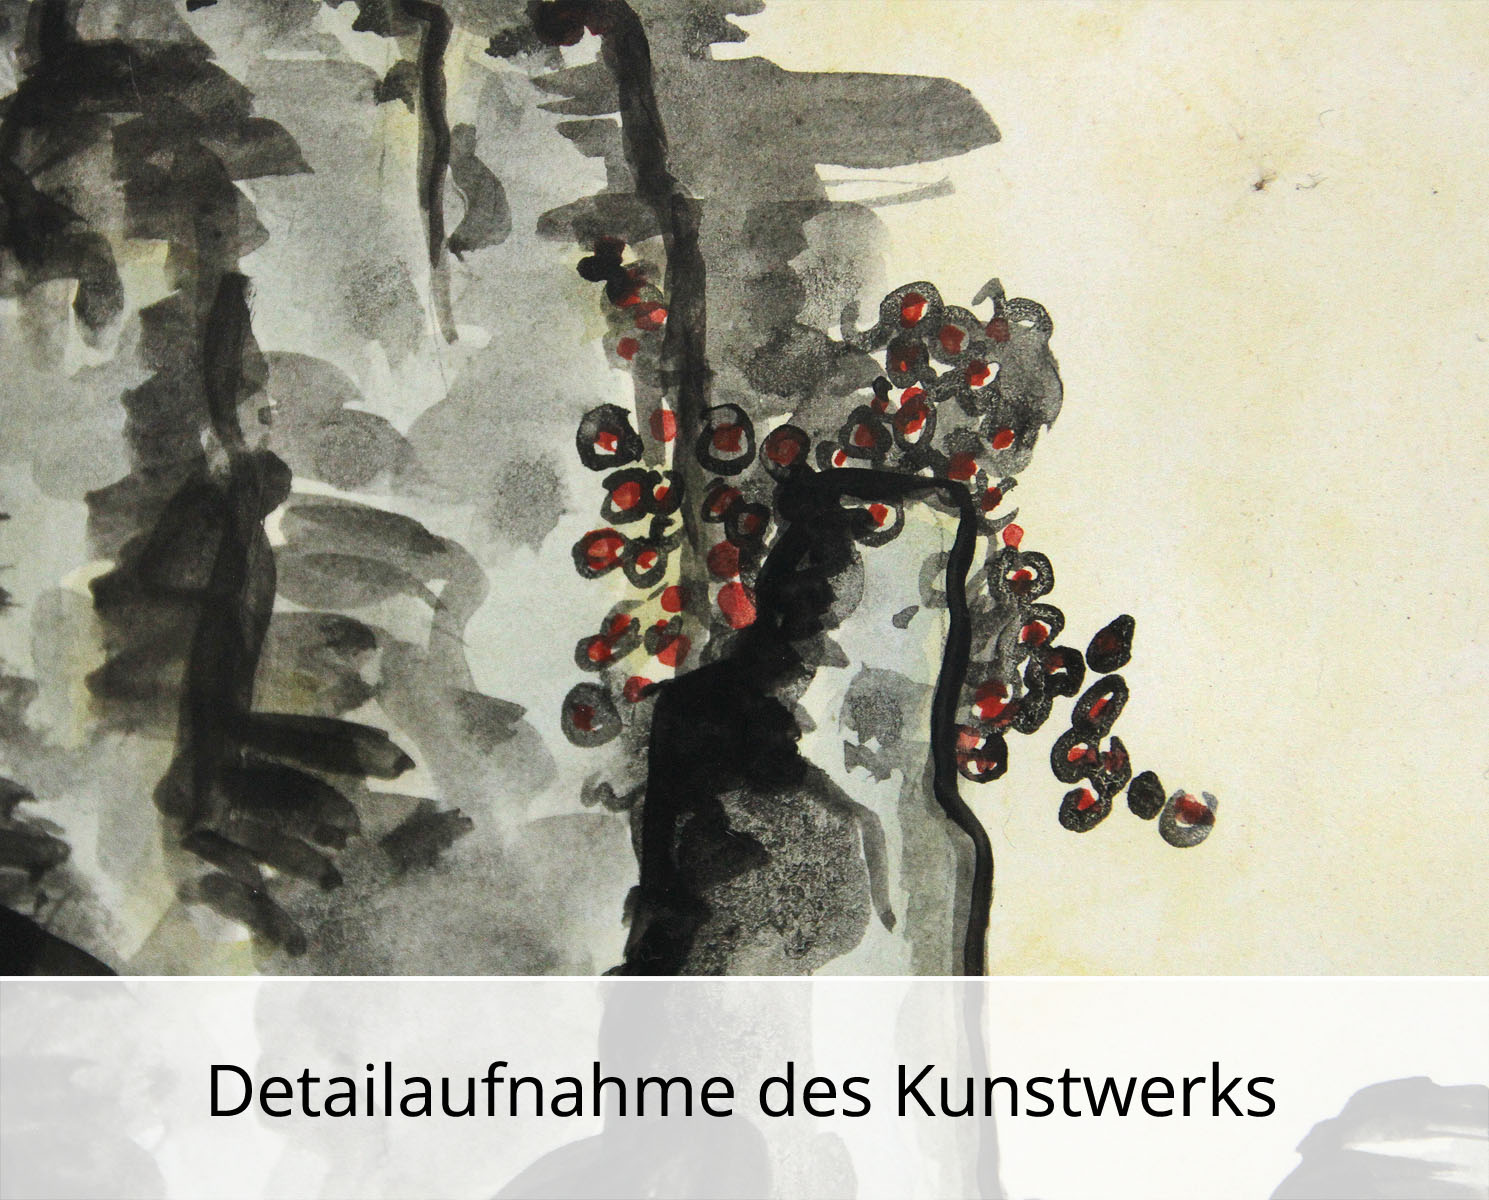 Acrylbild auf Papier, C. Blechschmidt: "Japanische Landschaft", Original/Unikat